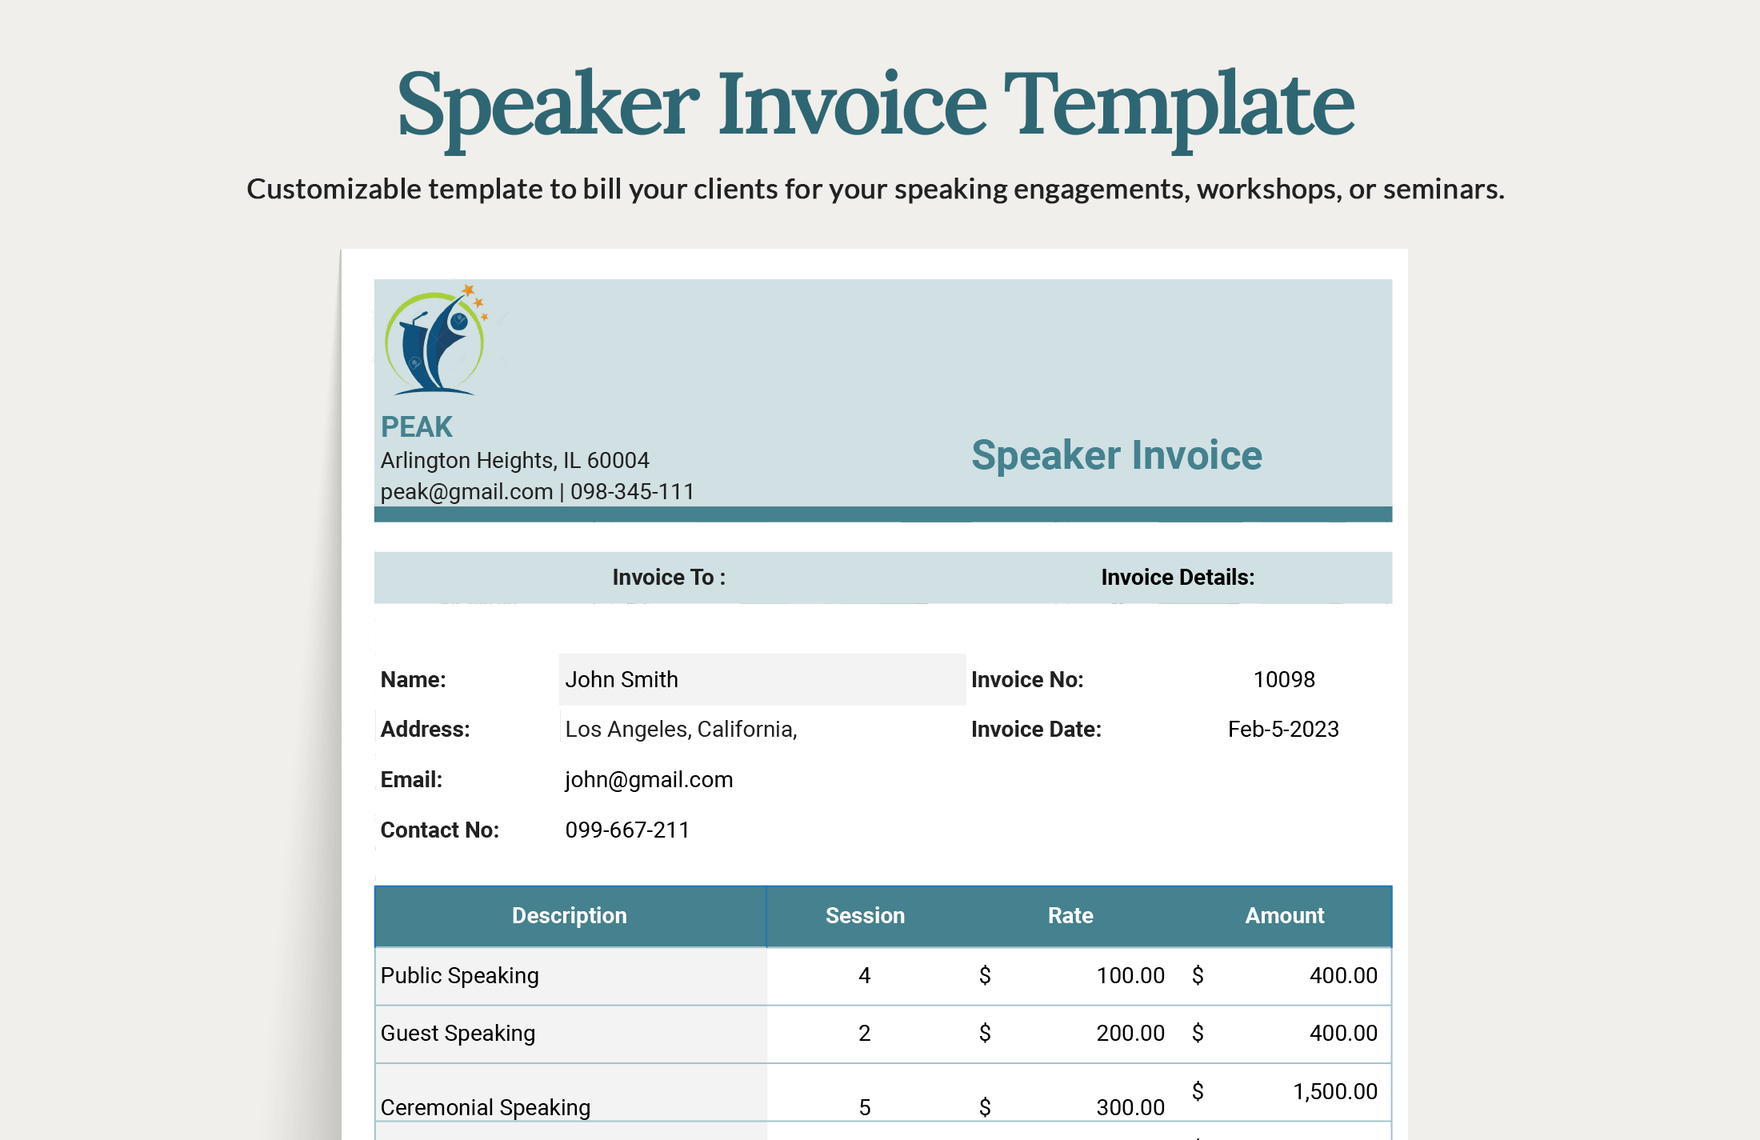 Speaker Invoice Template